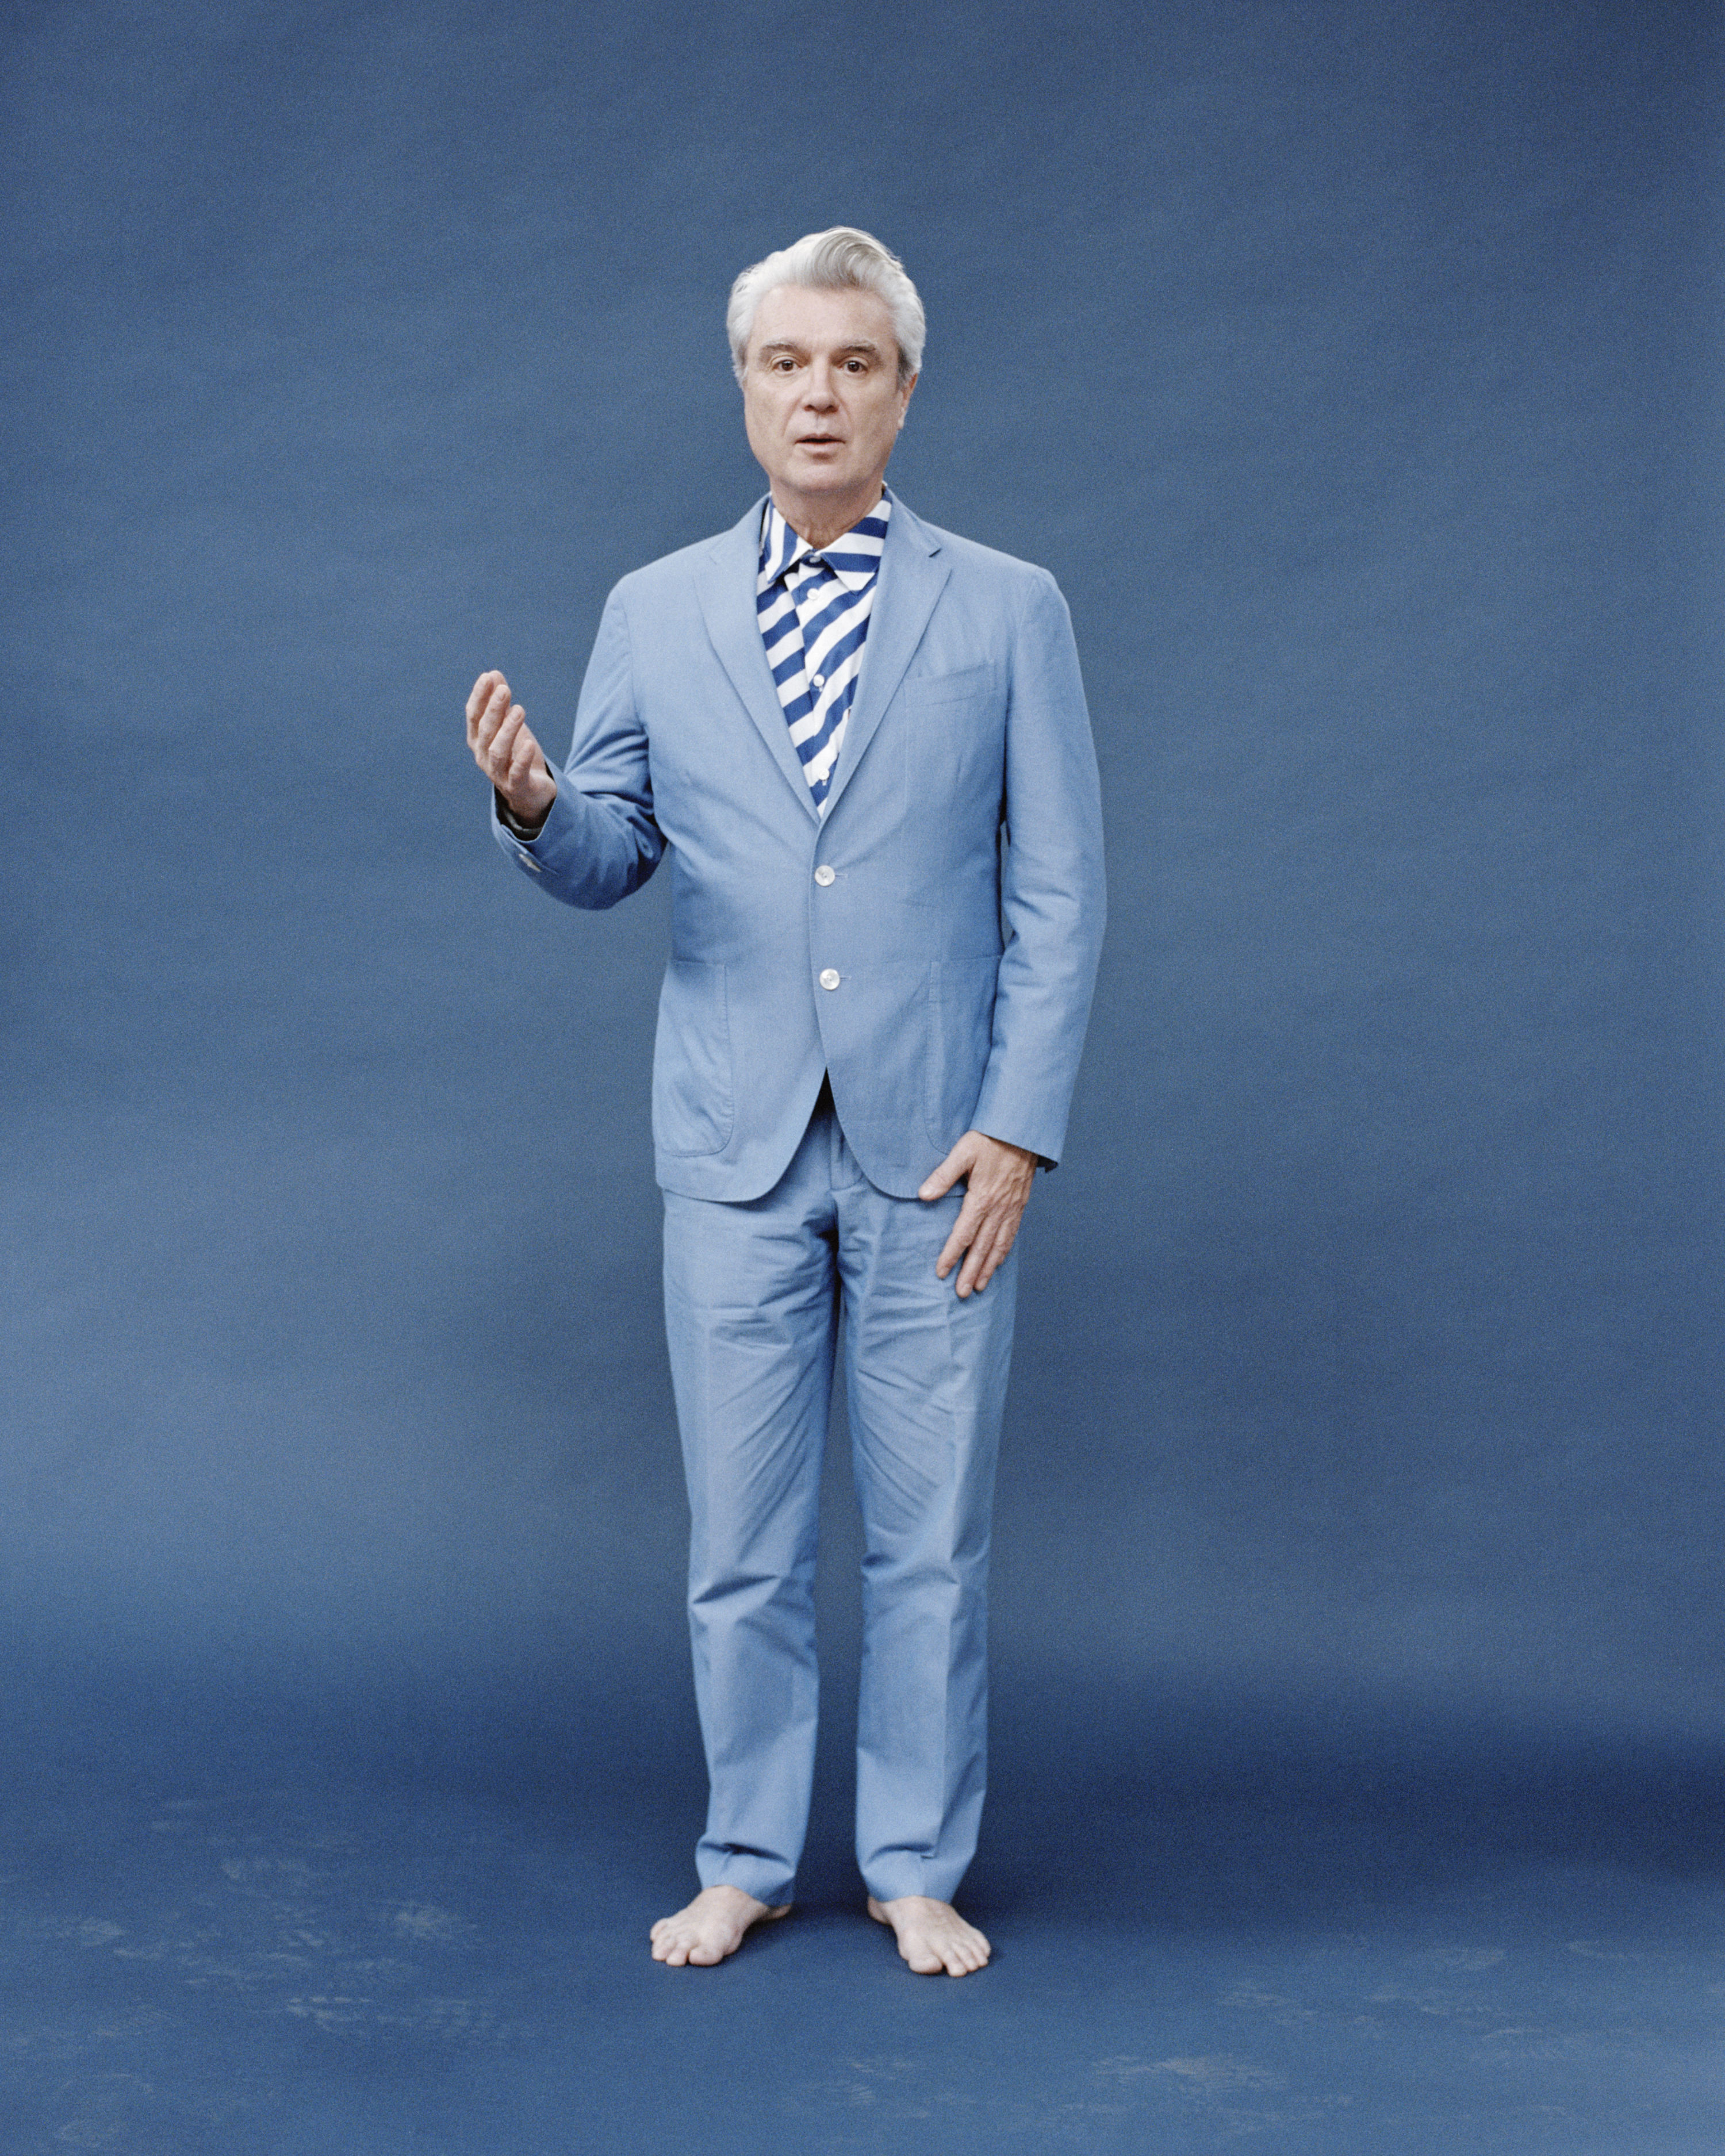 David Byrne, photograph by Jody Rogac